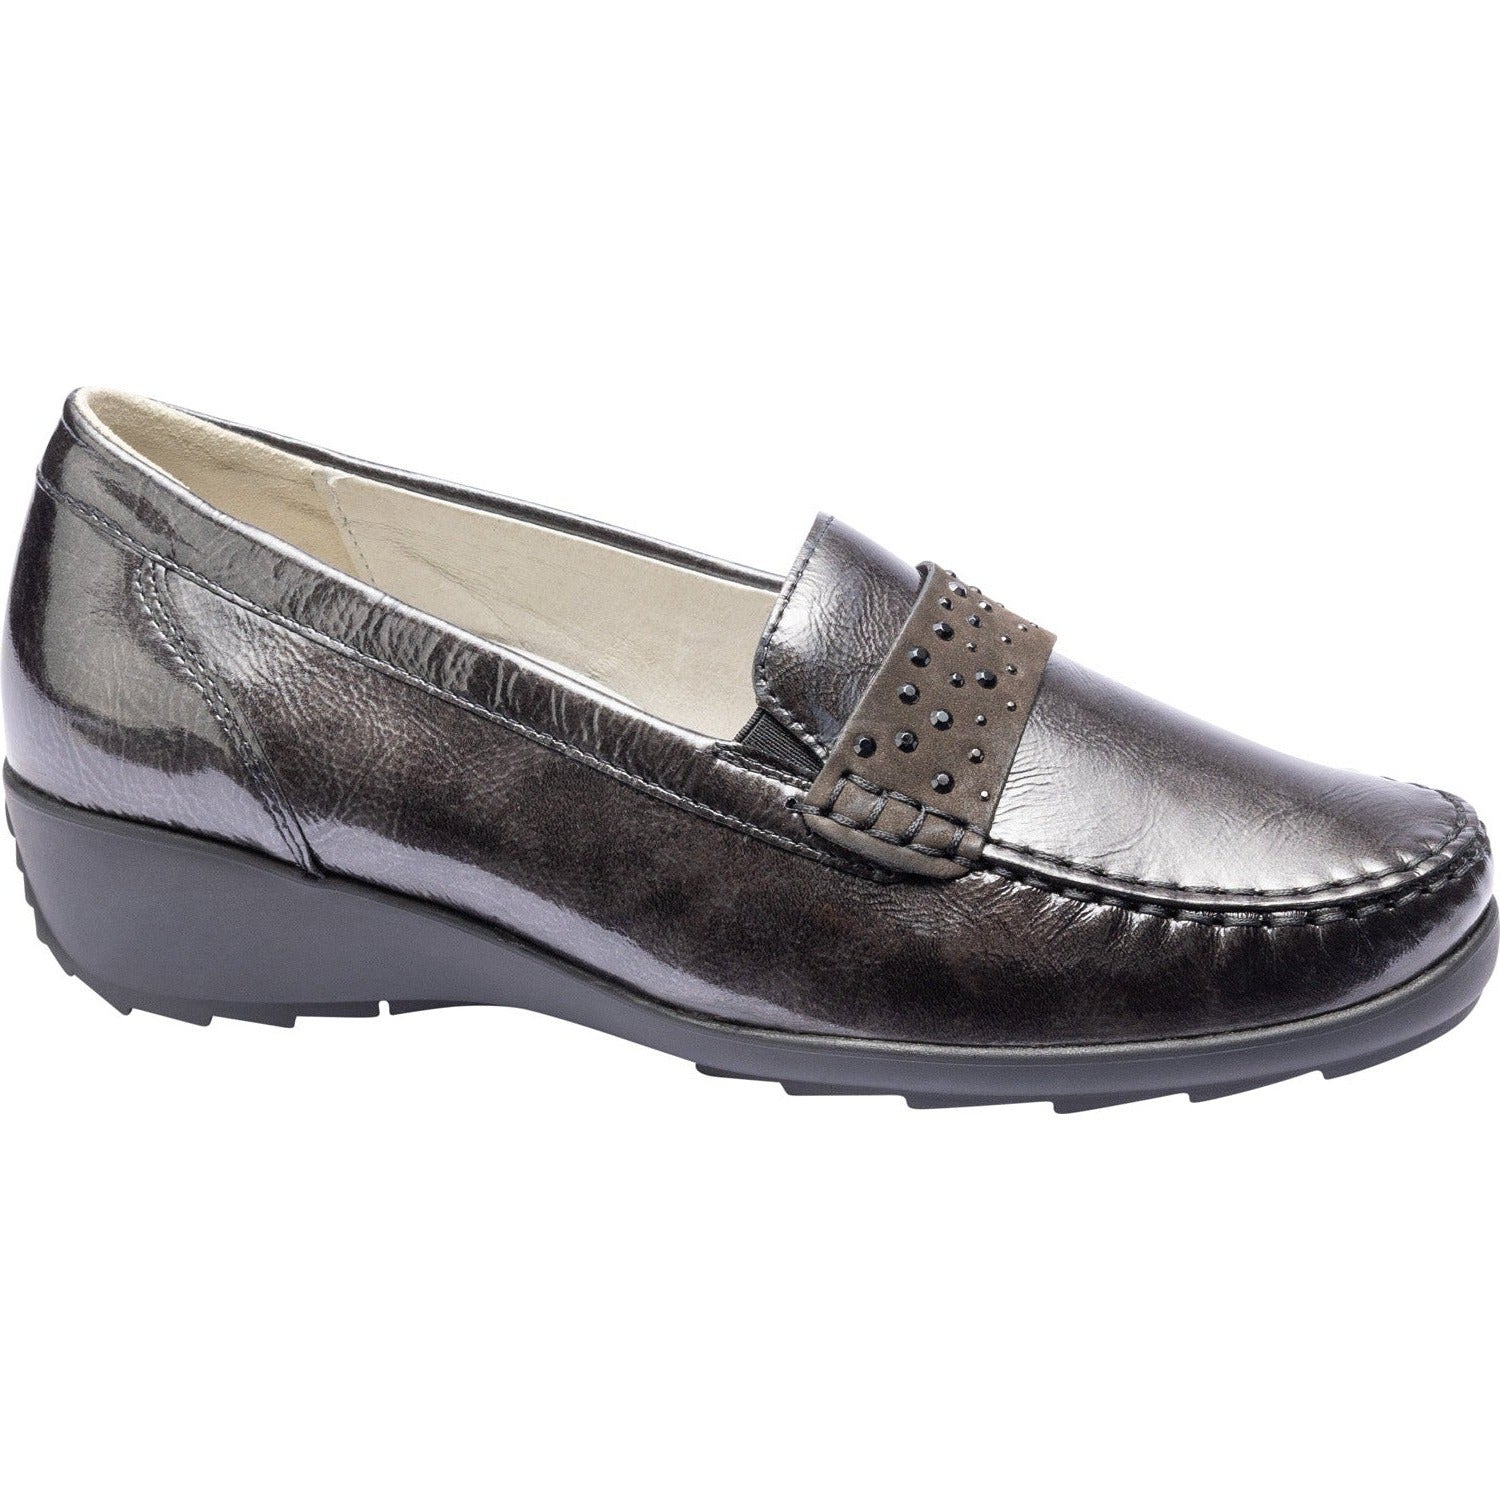 Waldlaufer Hanin (348501) - Ladies Slip On Shoe in Black Patent | 